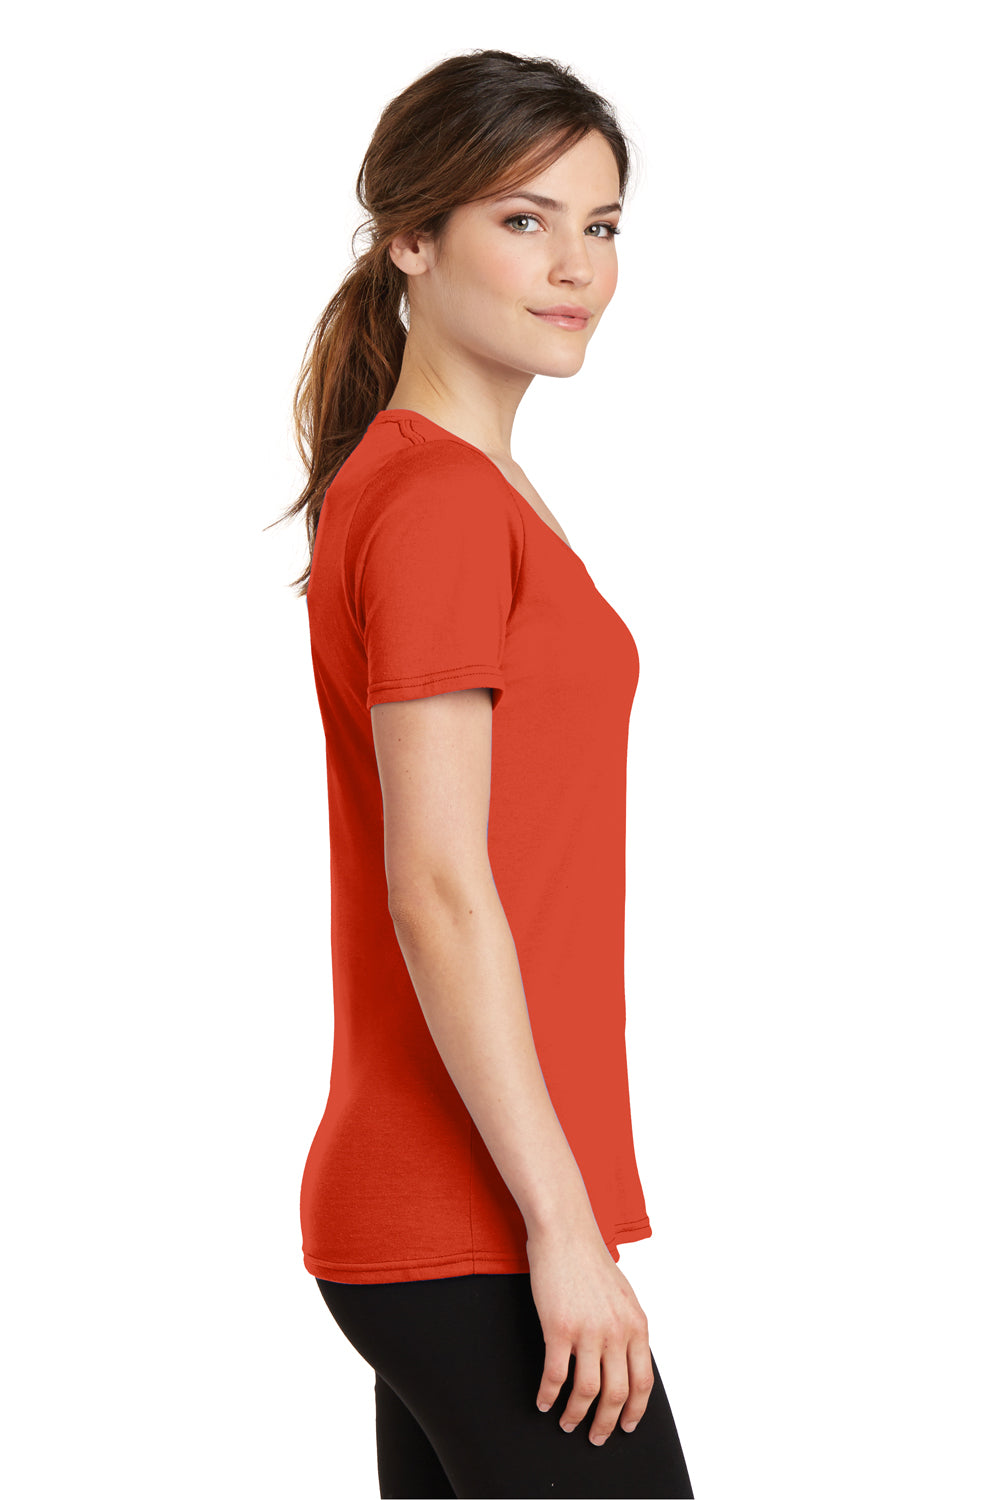 Port & Company LPC381V Womens Dry Zone Performance Moisture Wicking Short Sleeve V-Neck T-Shirt Orange Side